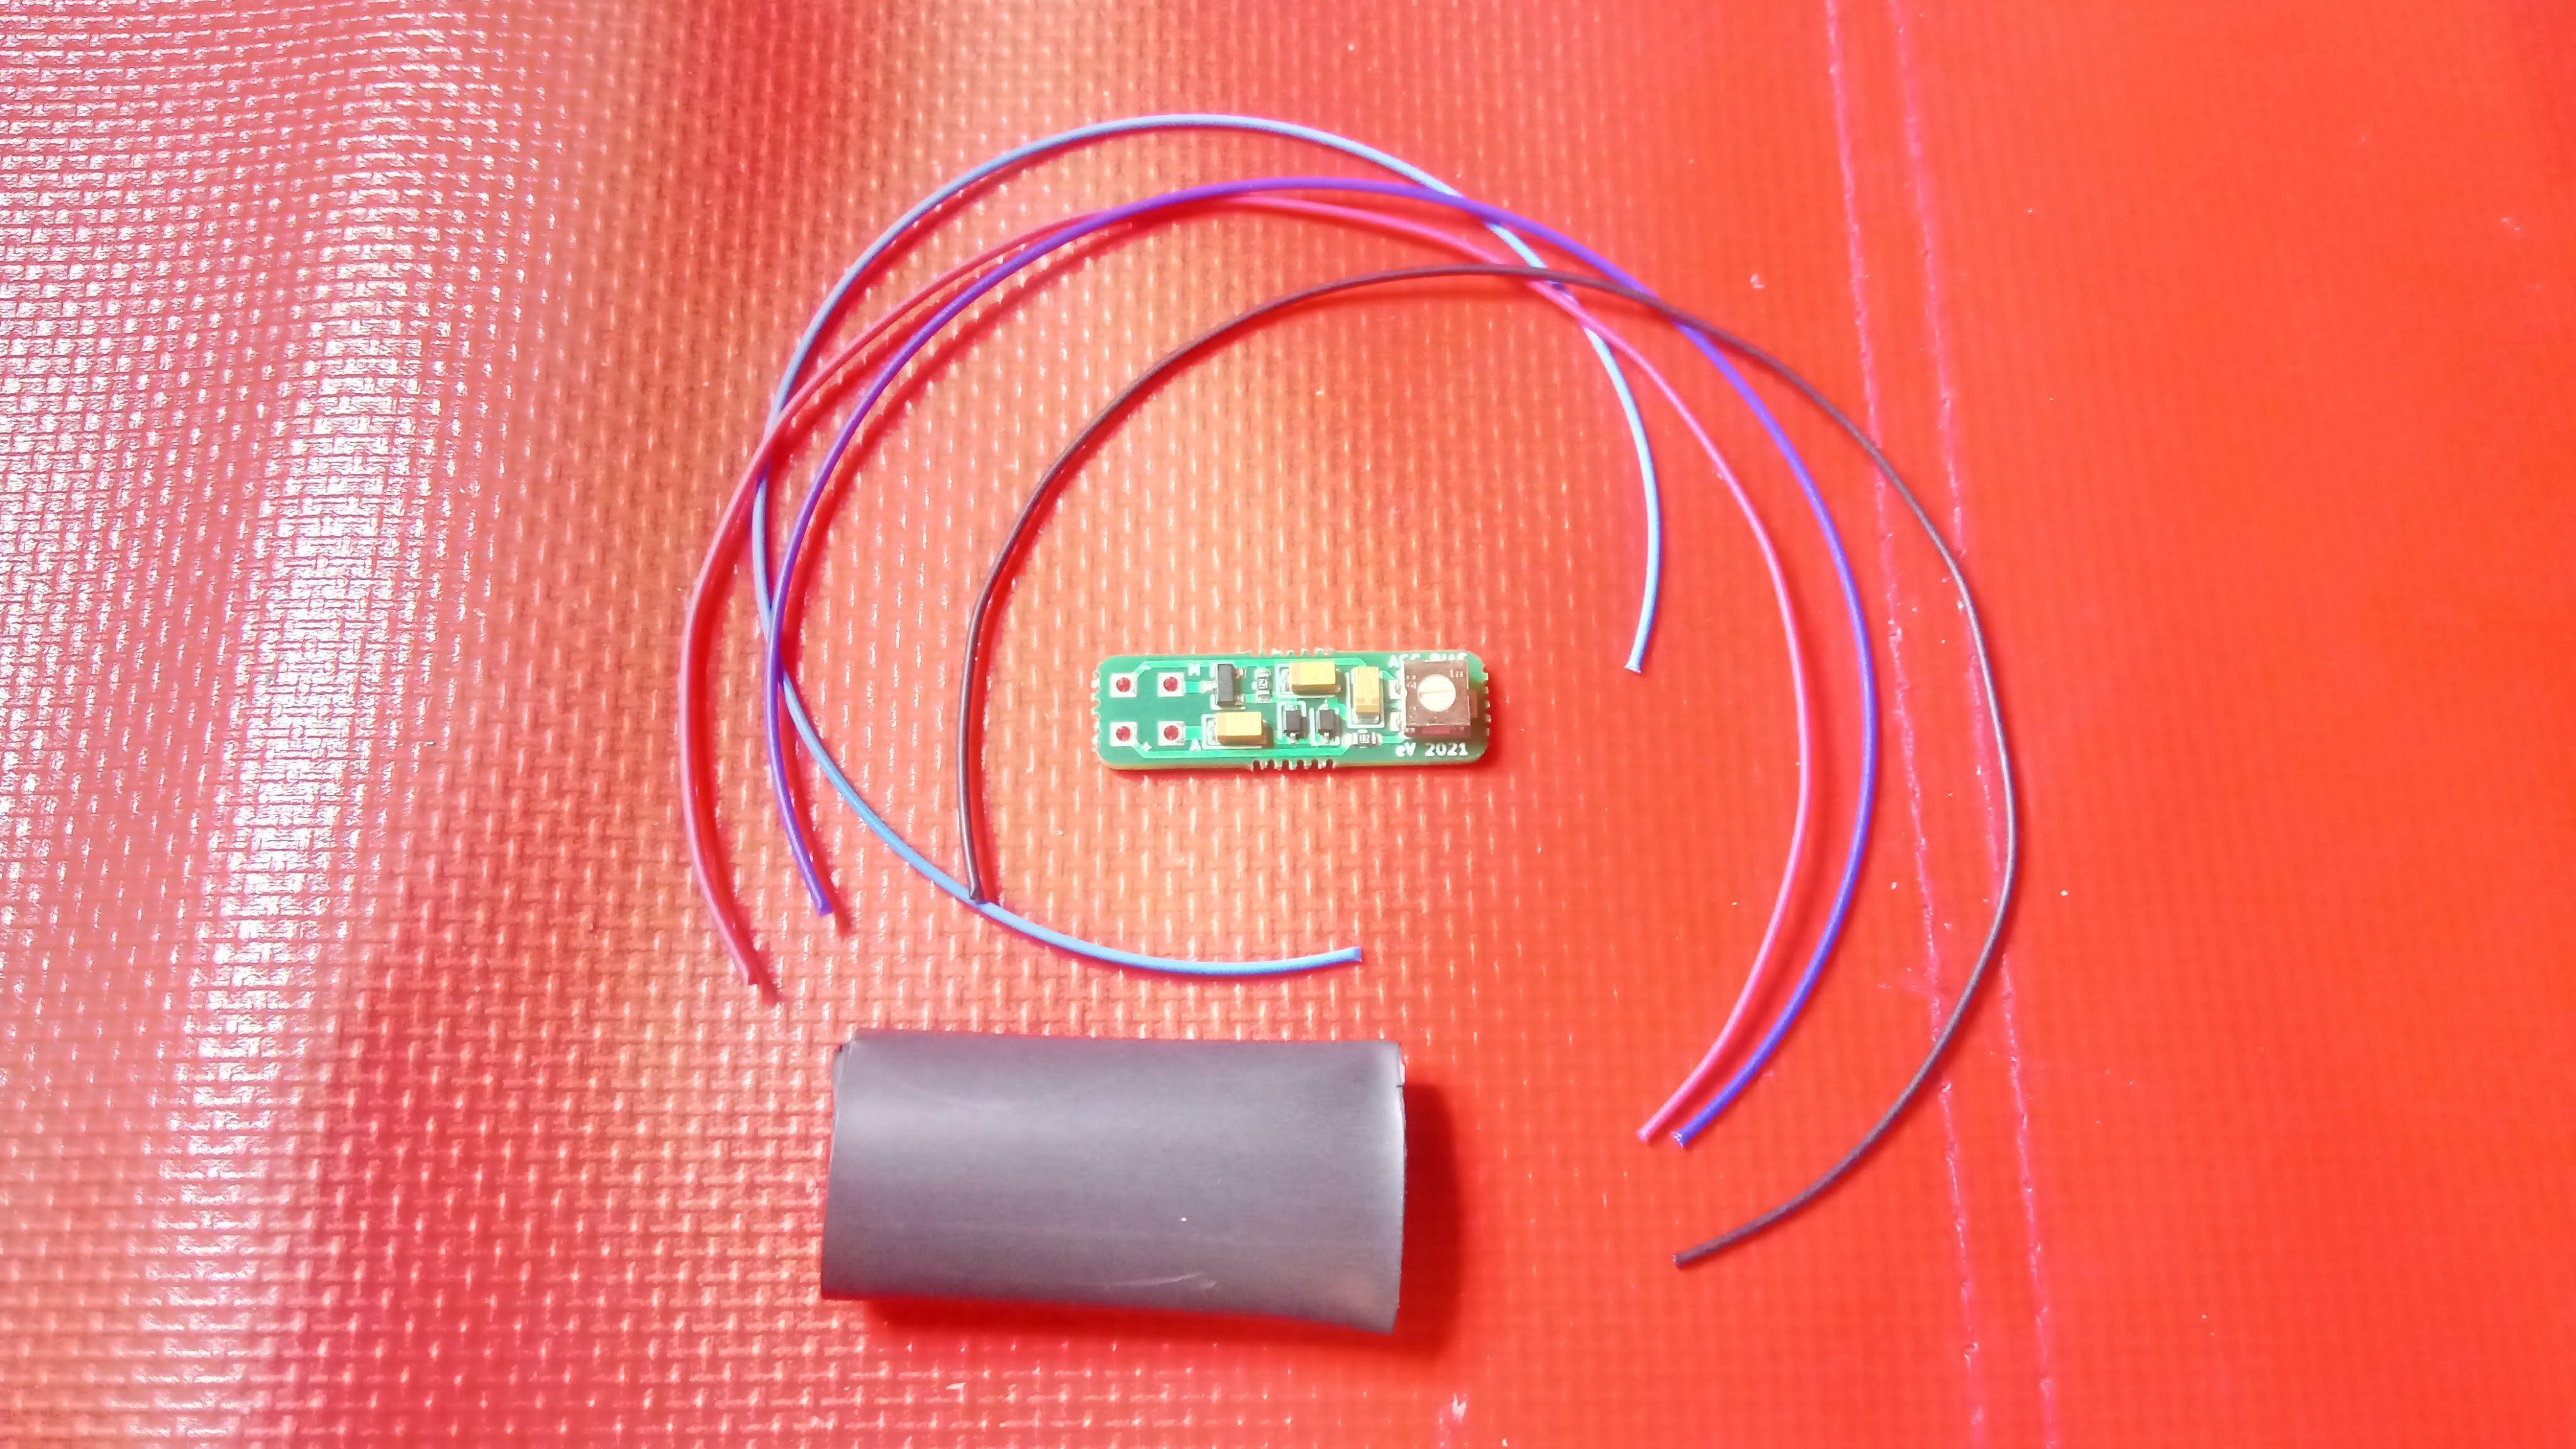 AGC kit prior to soldering